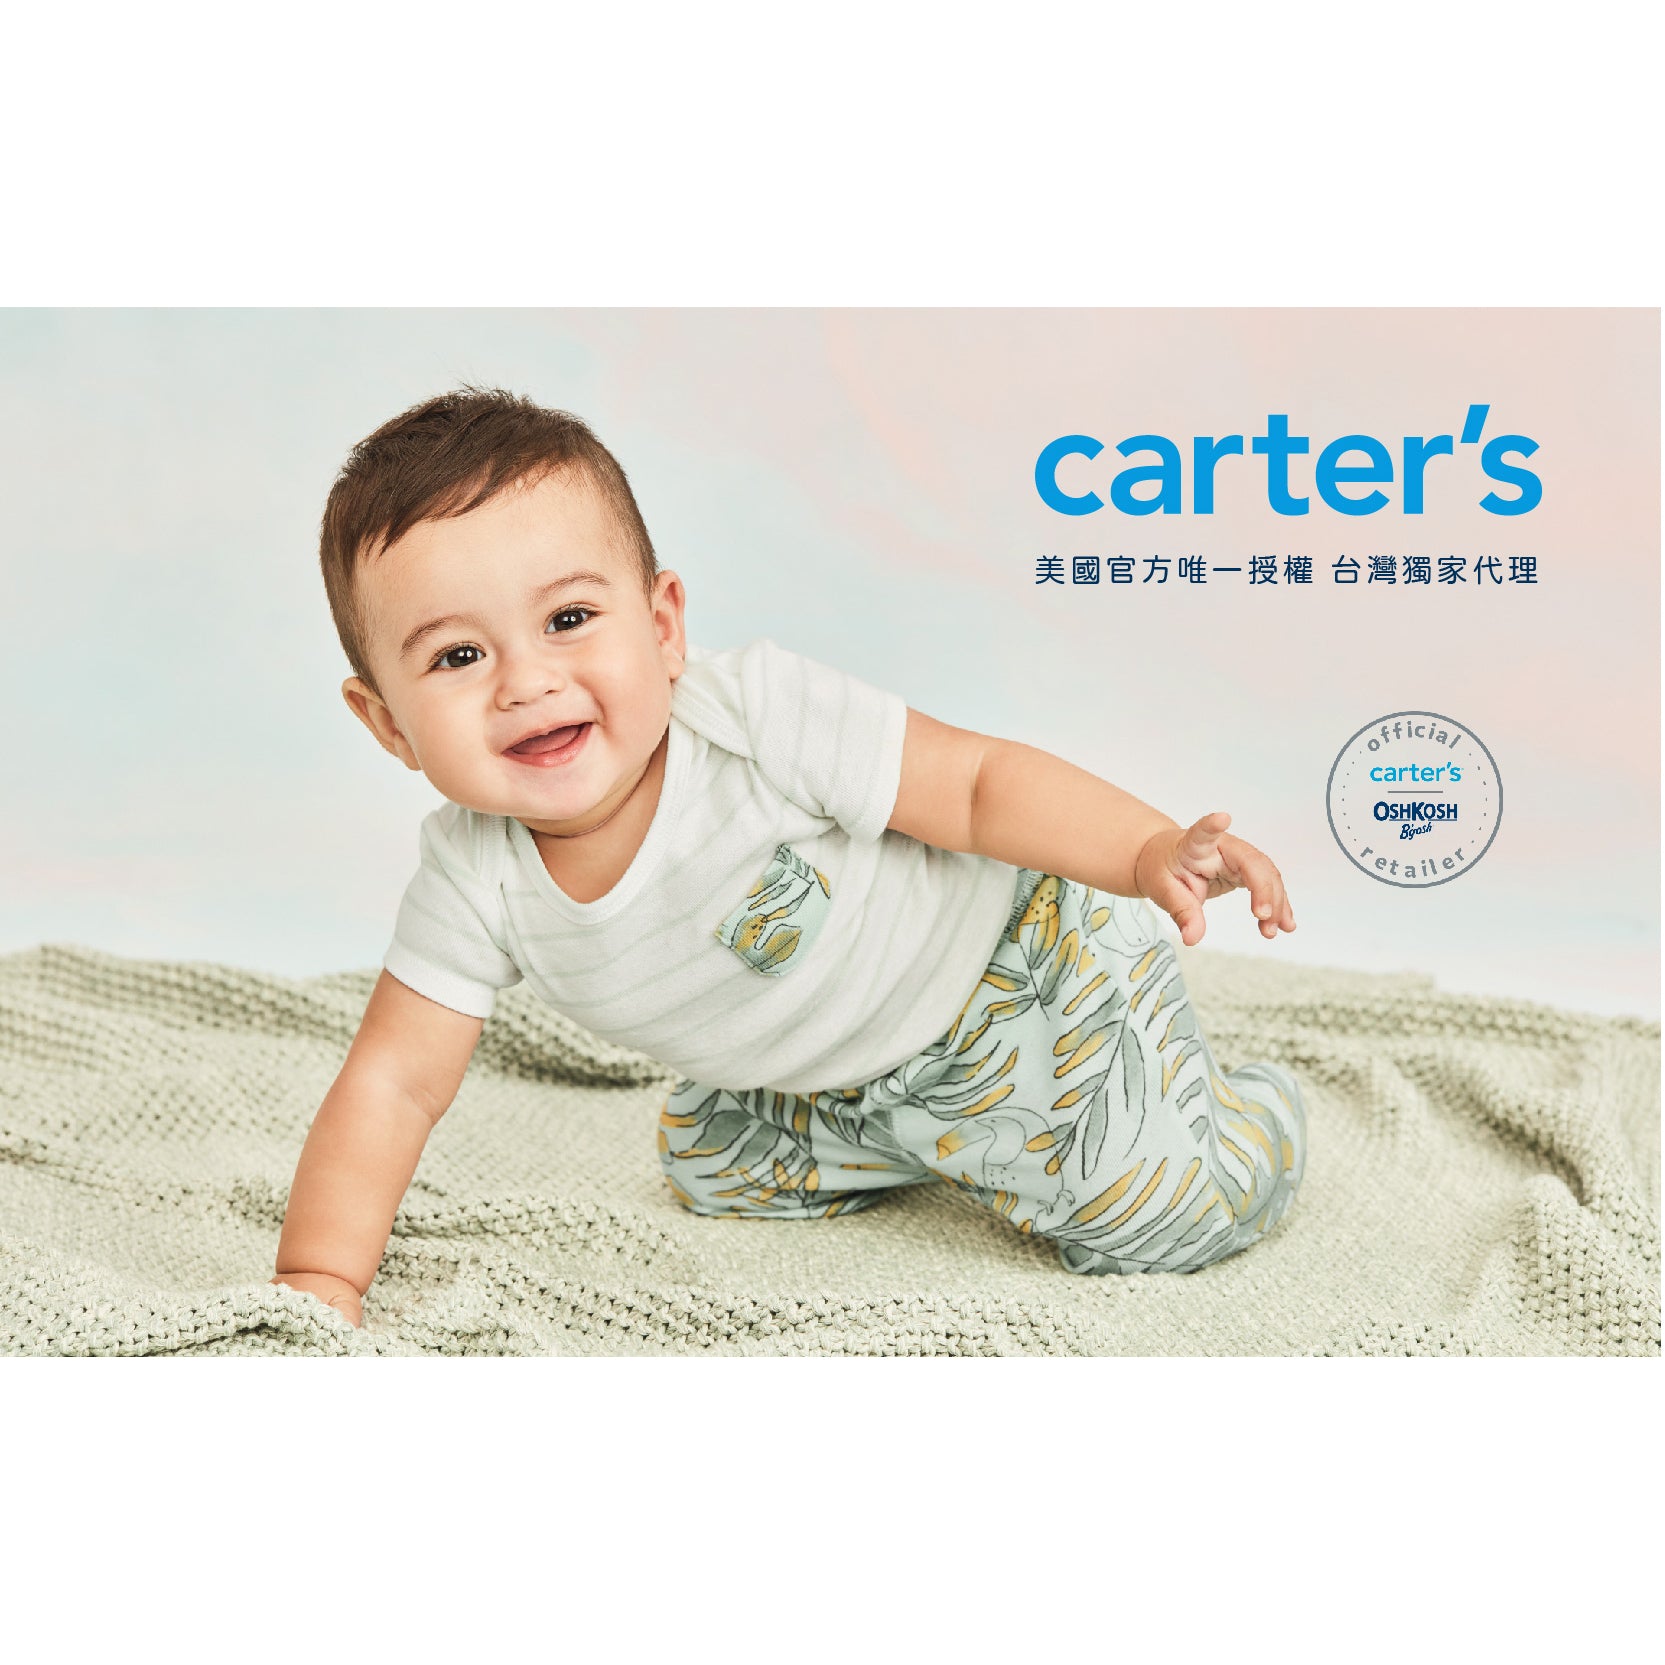 Carter's dark blue casual jacket (12M-24M) – Carter's｜Oshkosh